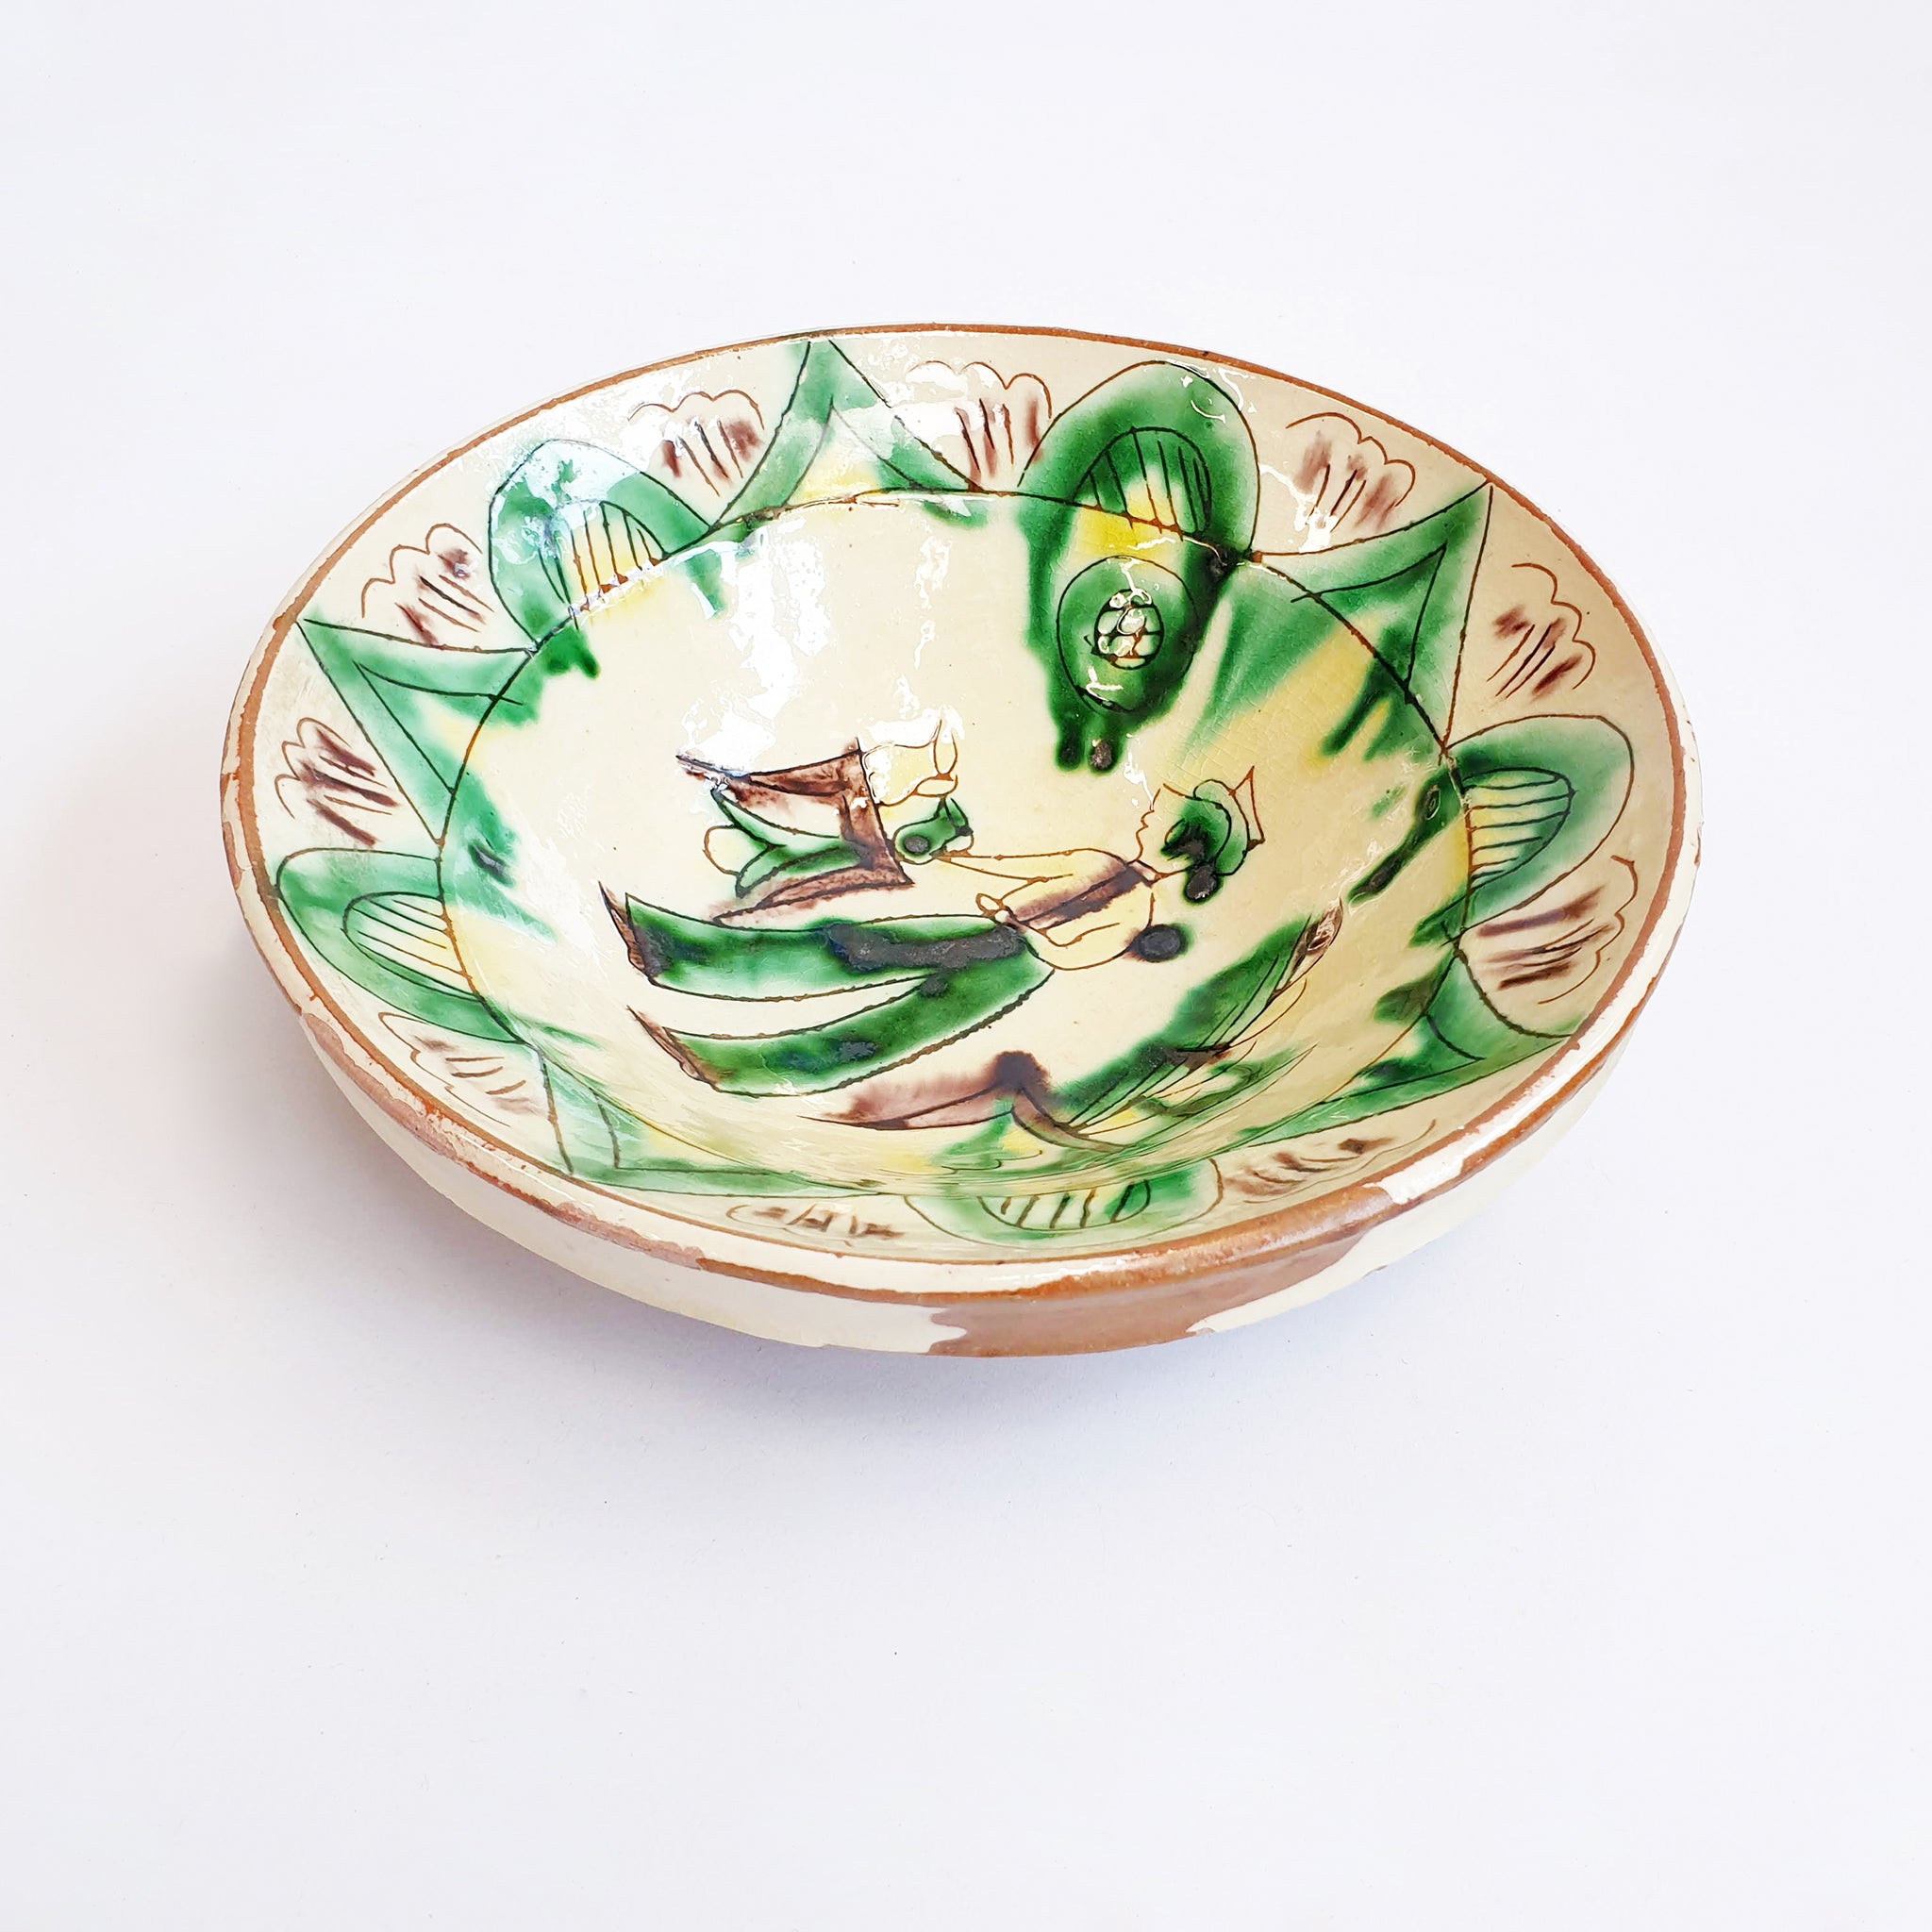 Vintage folk art bowl